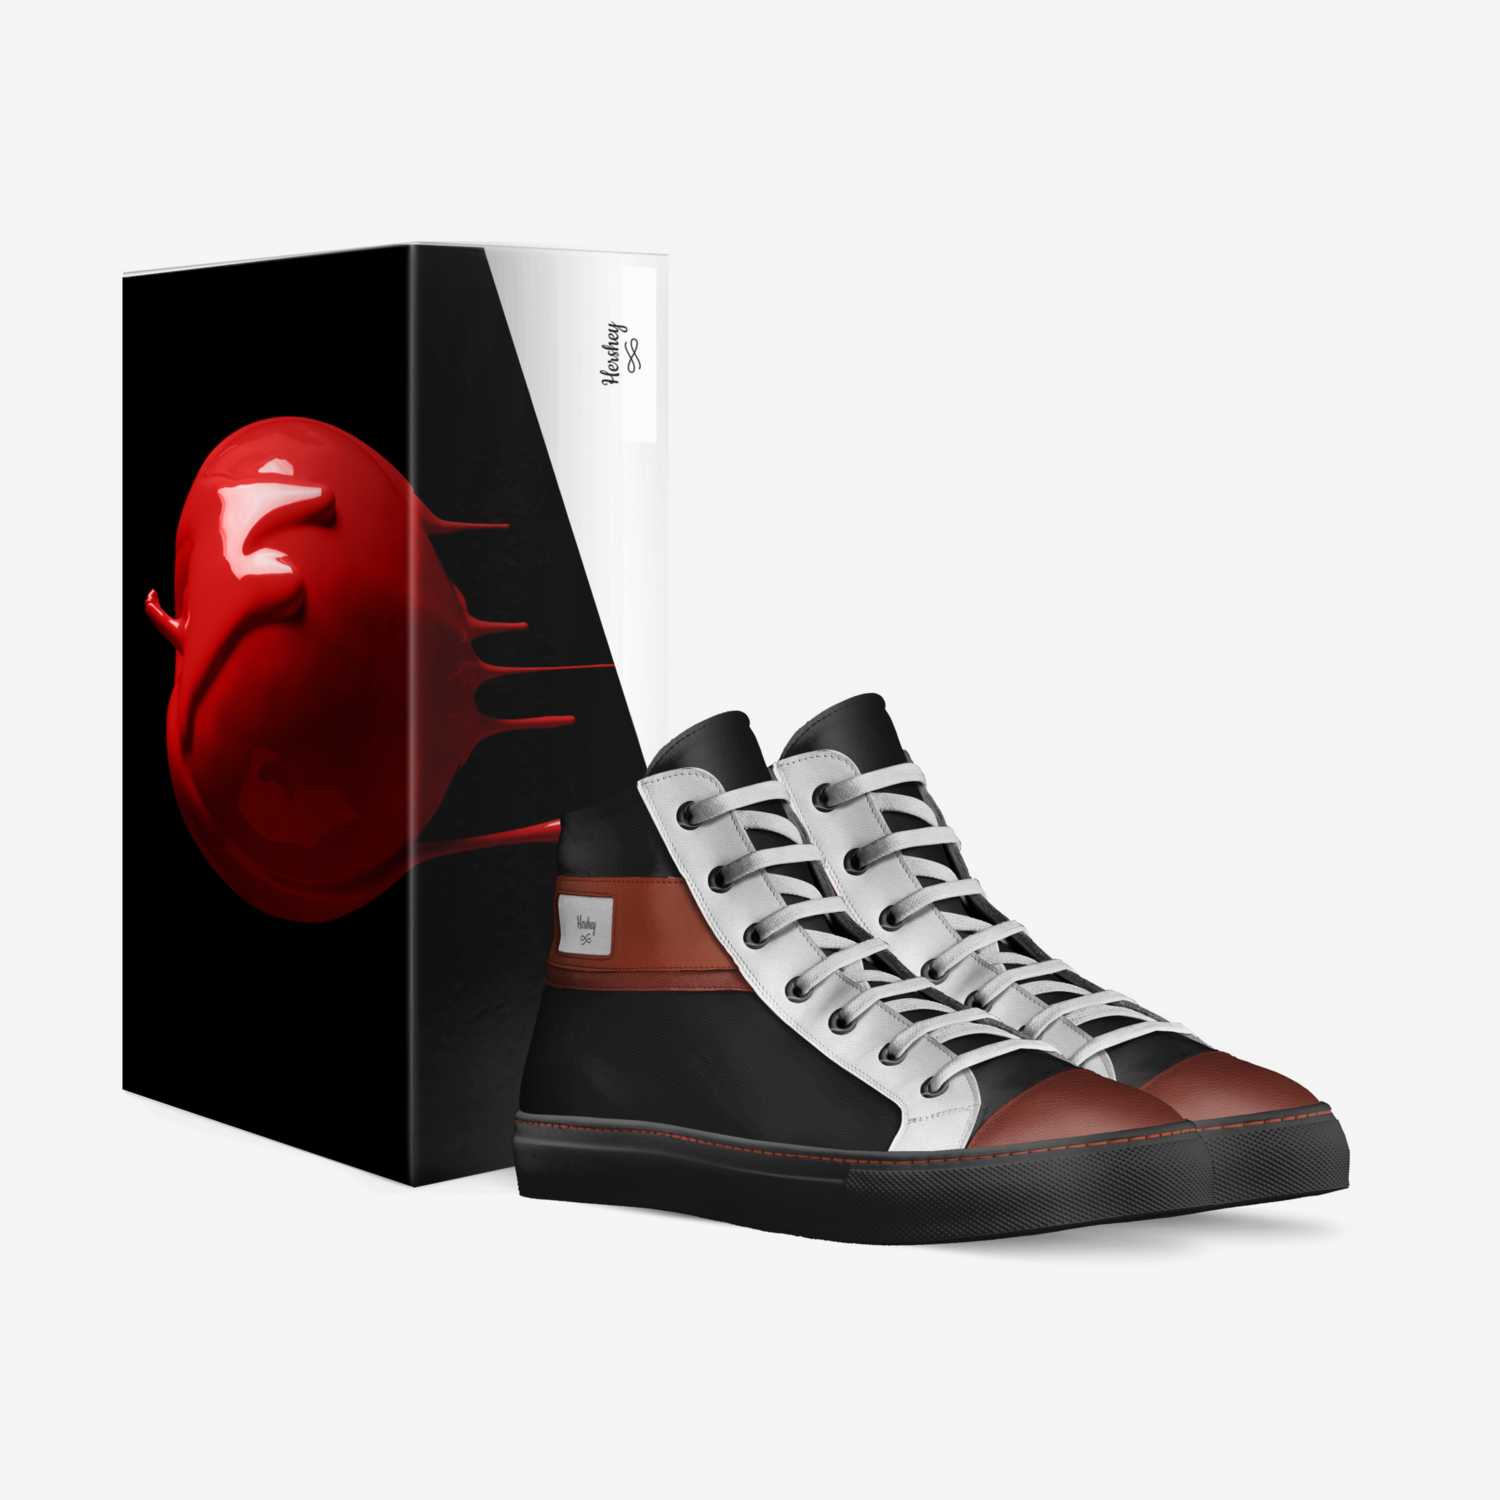 hershey custom made in Italy shoes by Santiagojiemen | Box view